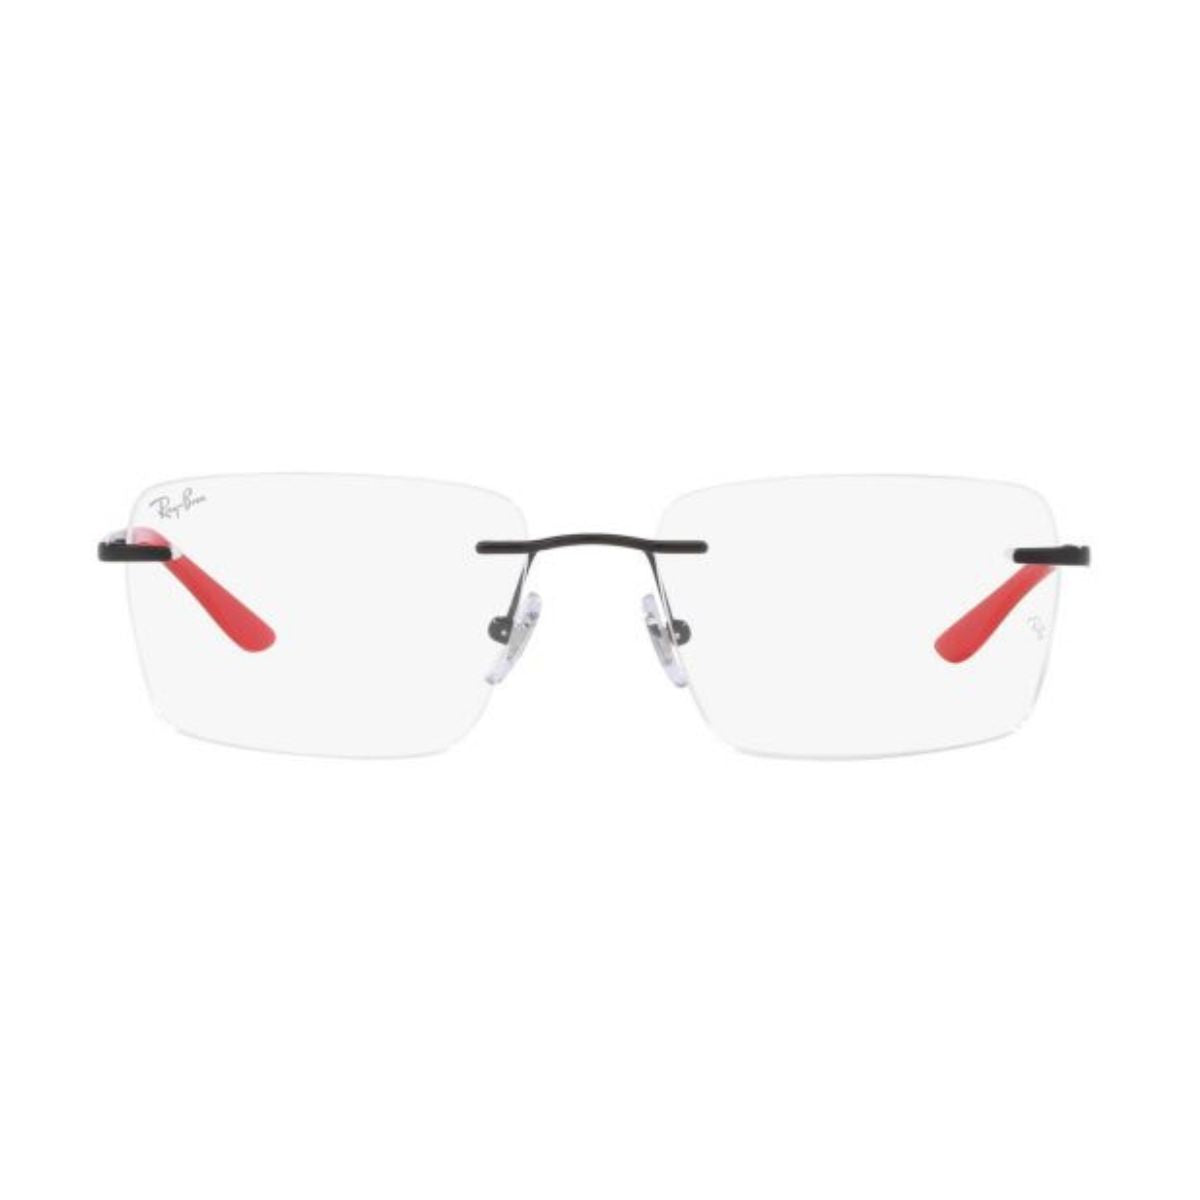 "buy Rayban 6506I 2509 square eyeglasses frame for men and women online at optorium"